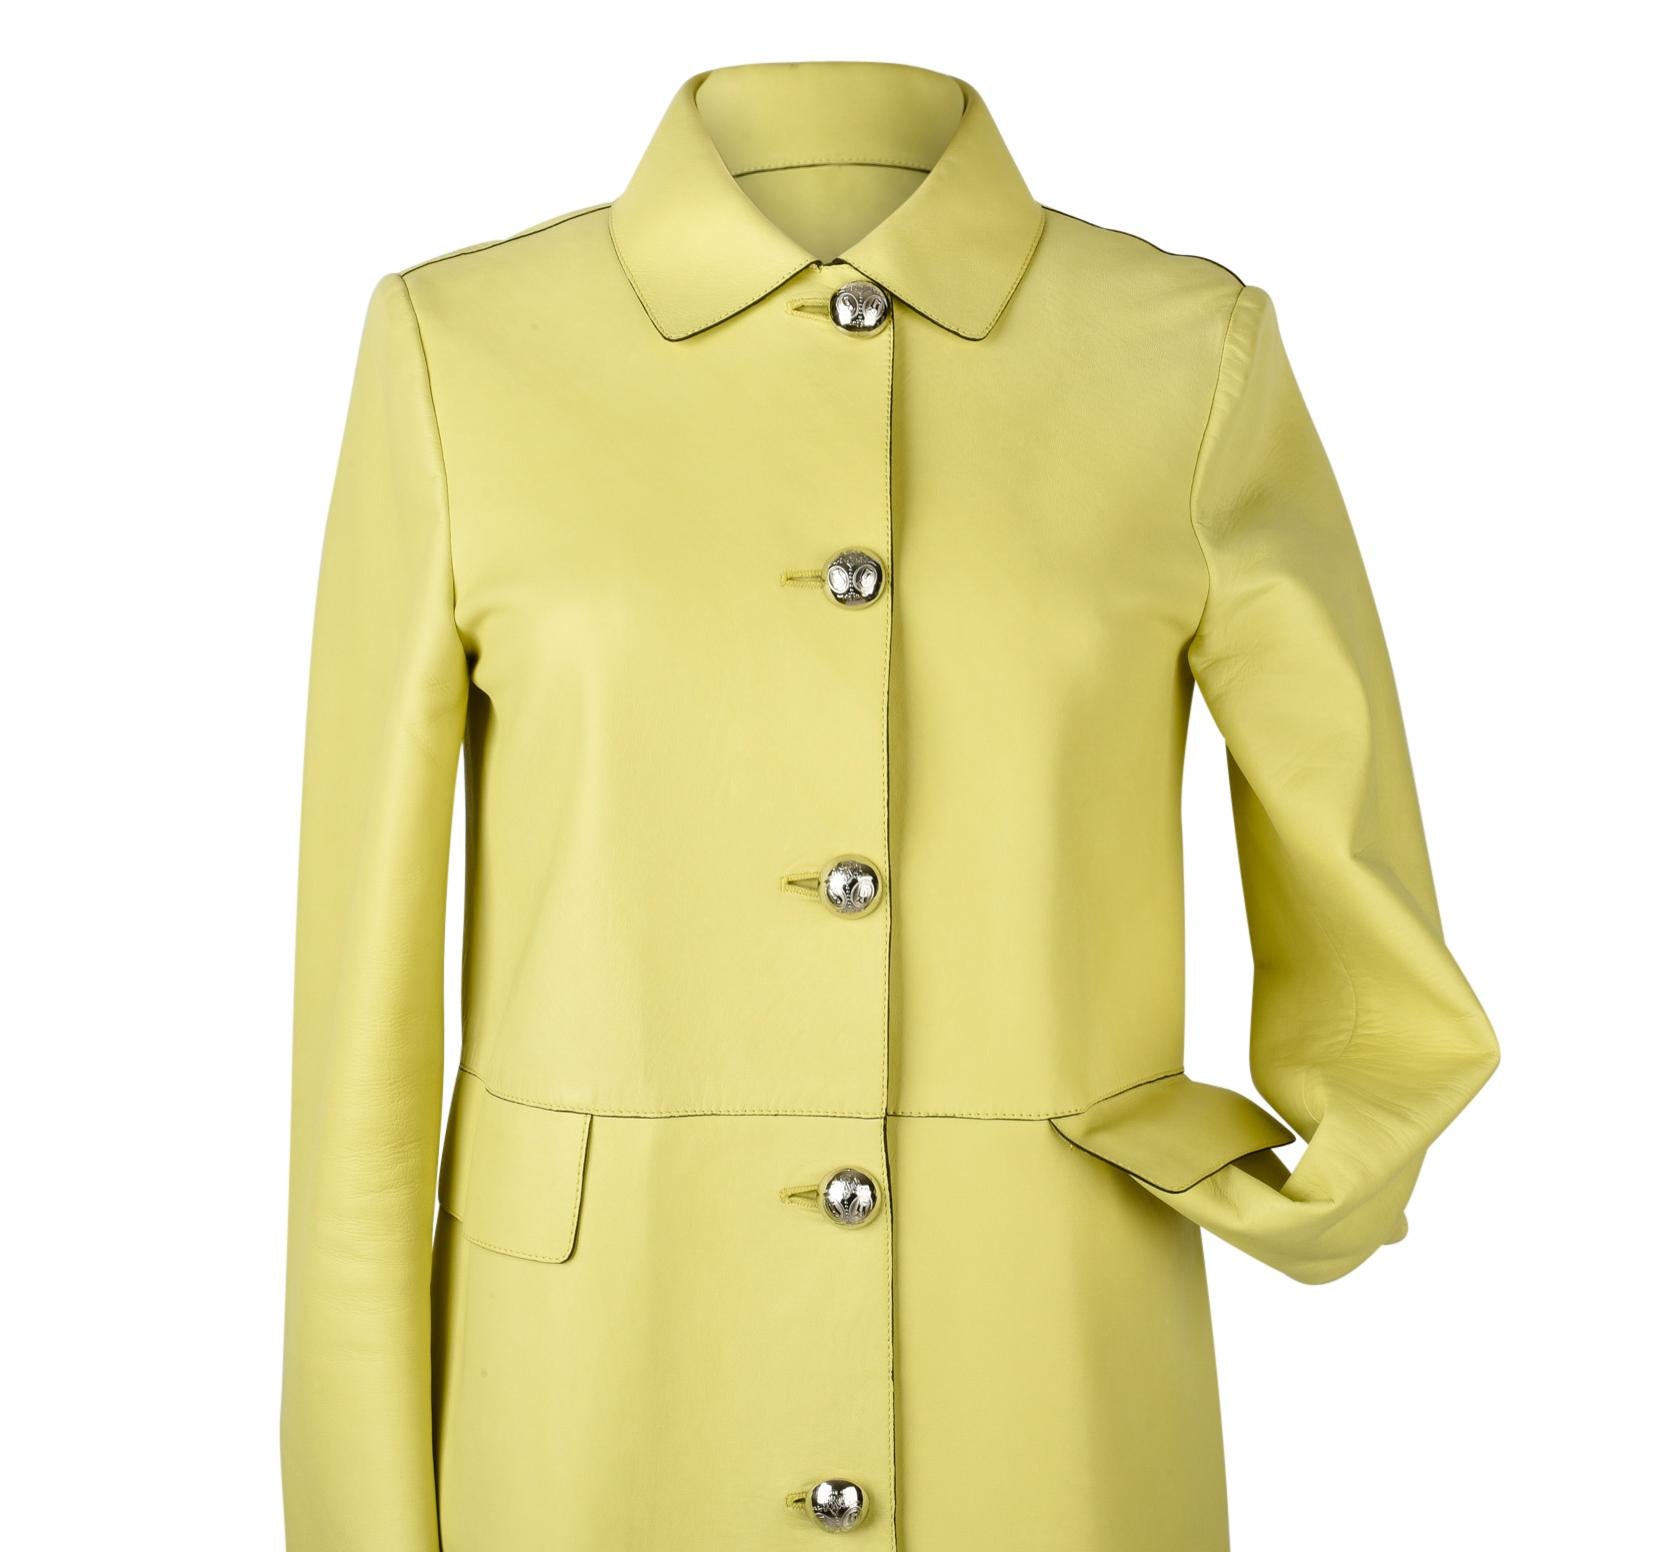 Women's Gucci Coat Lambskin Leather Lime Yellow 40 / 8